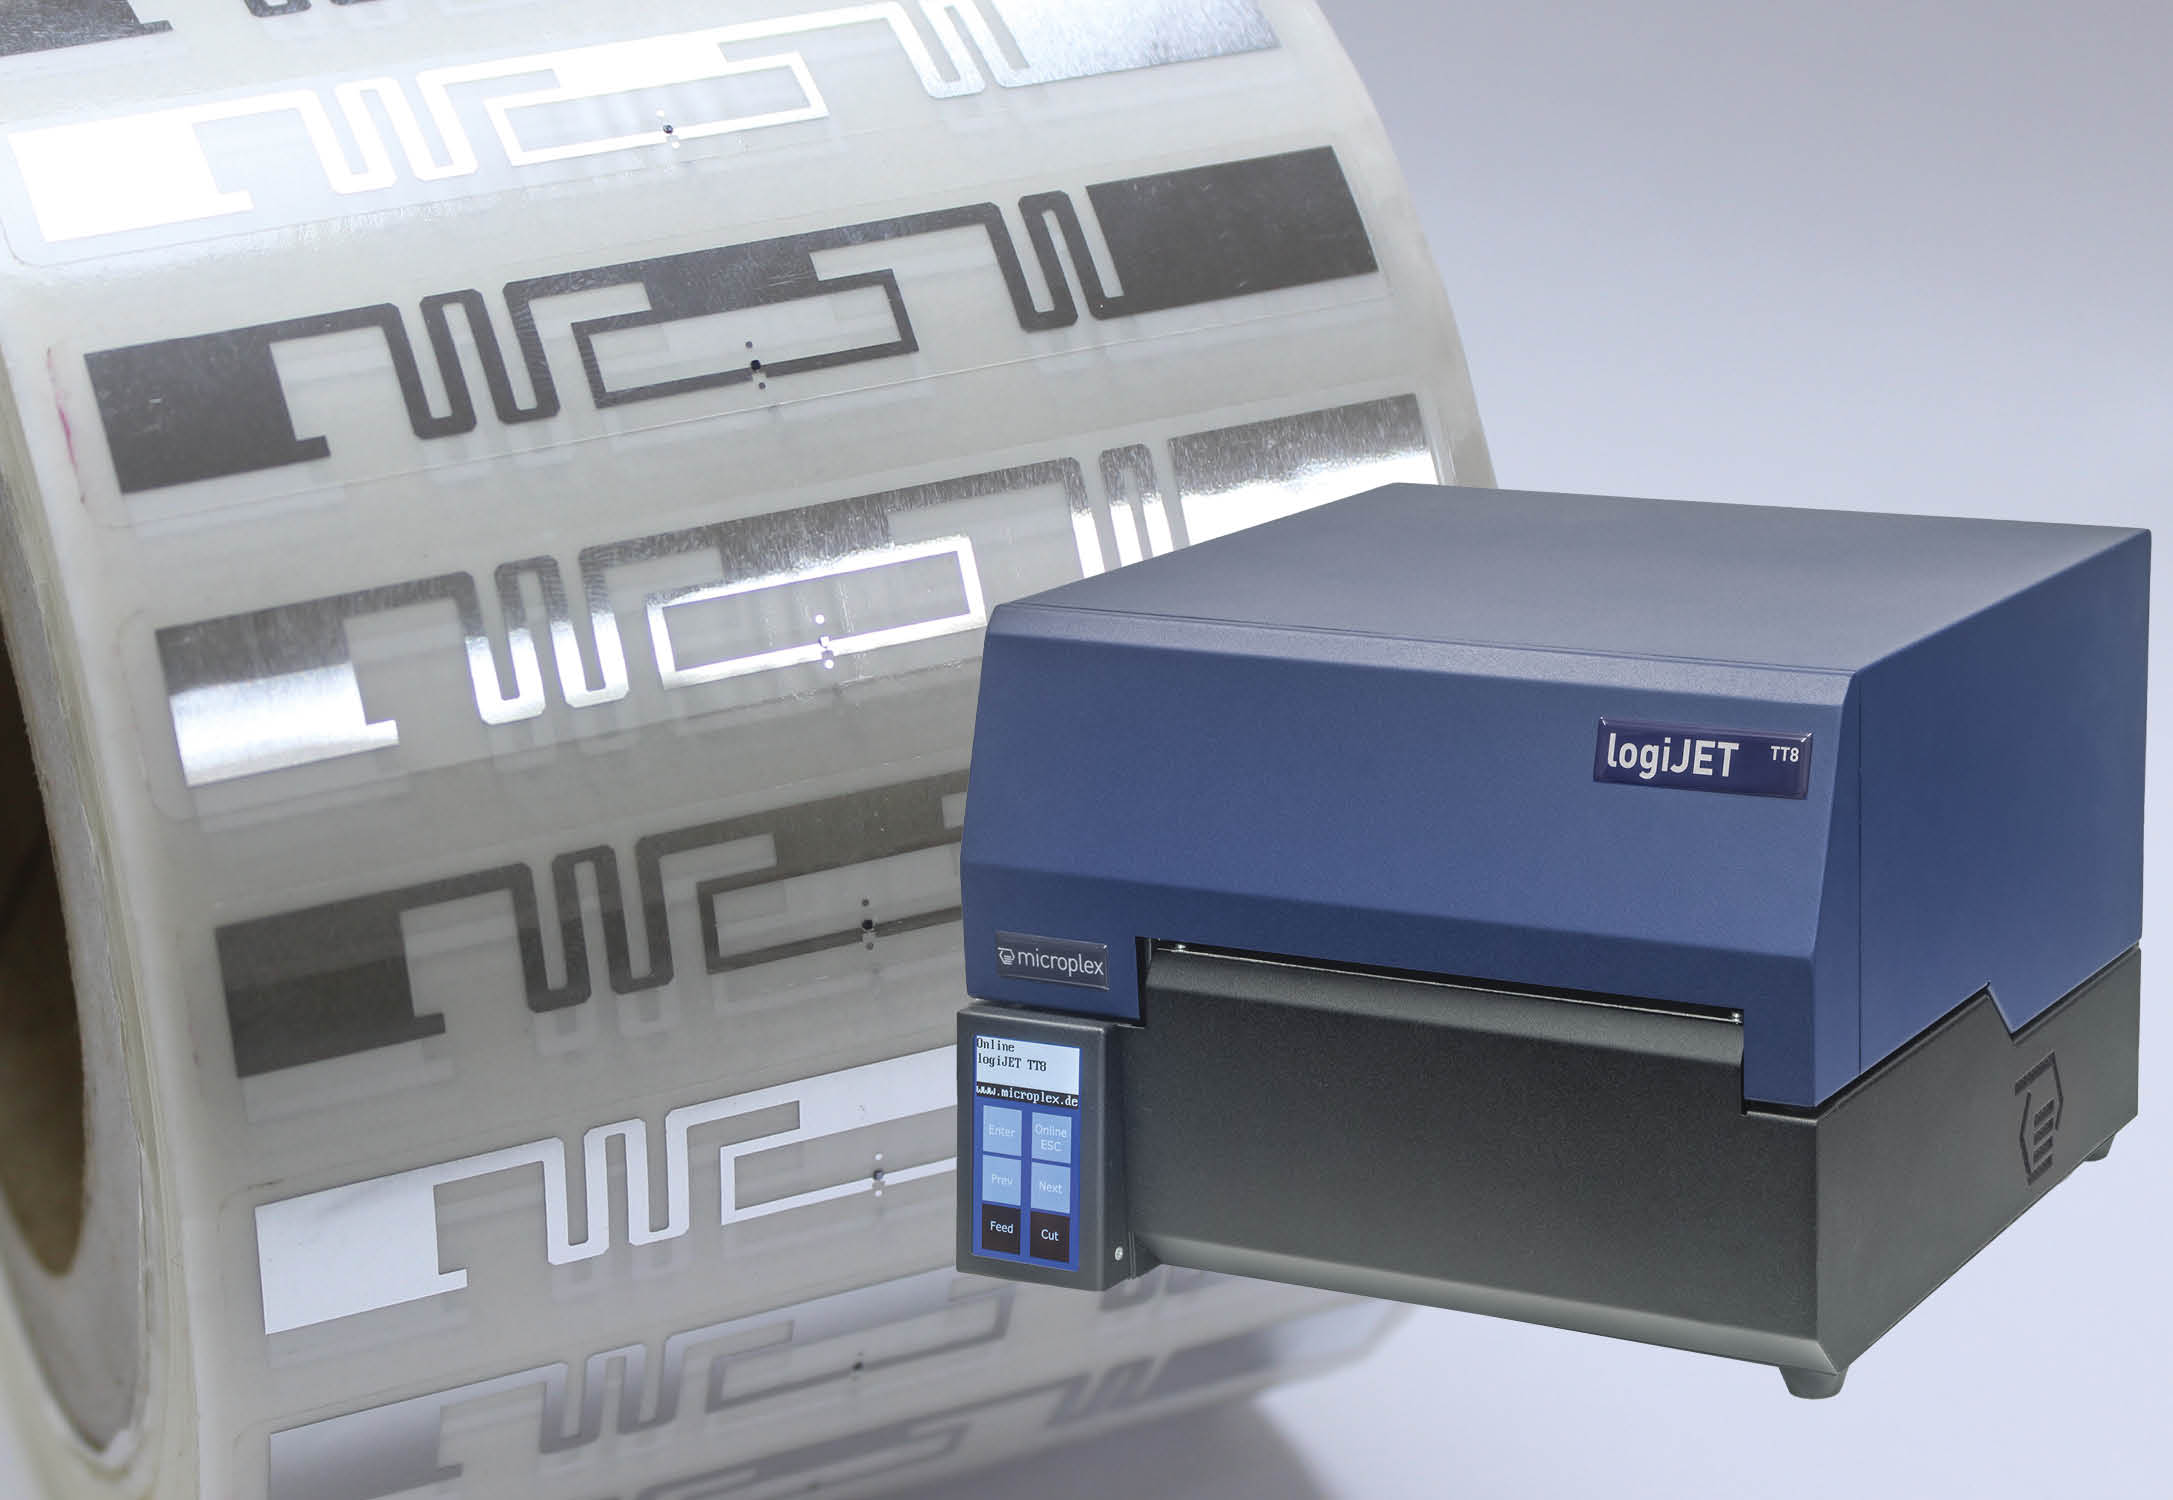 Impresión RFID UHF con Microplex